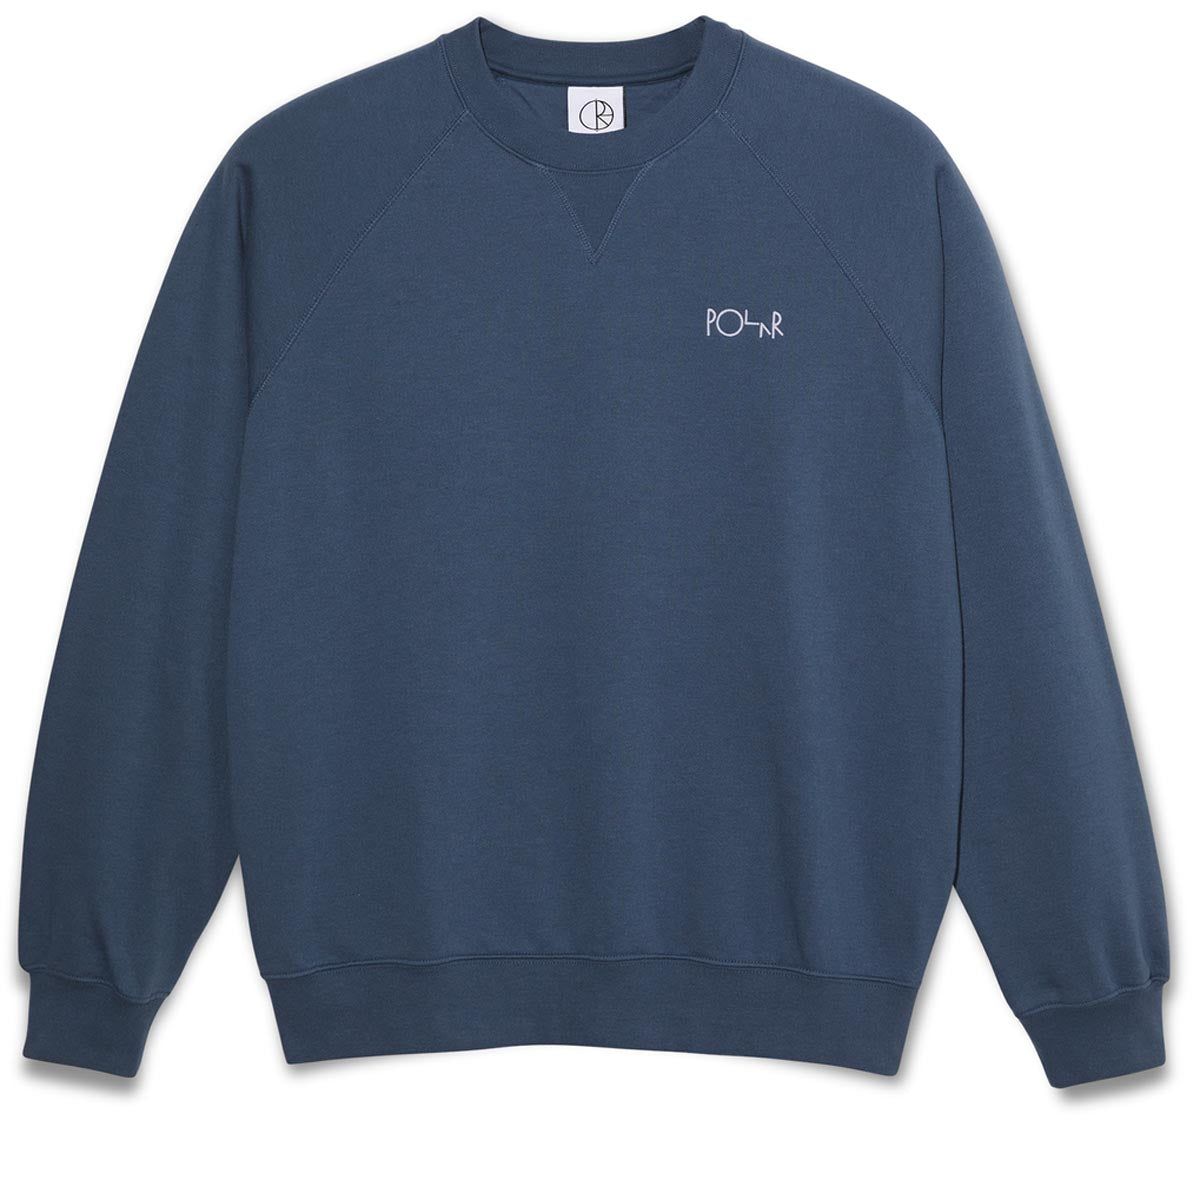 Polar Default Crewneck Sweatshirt - Grey Blue image 1